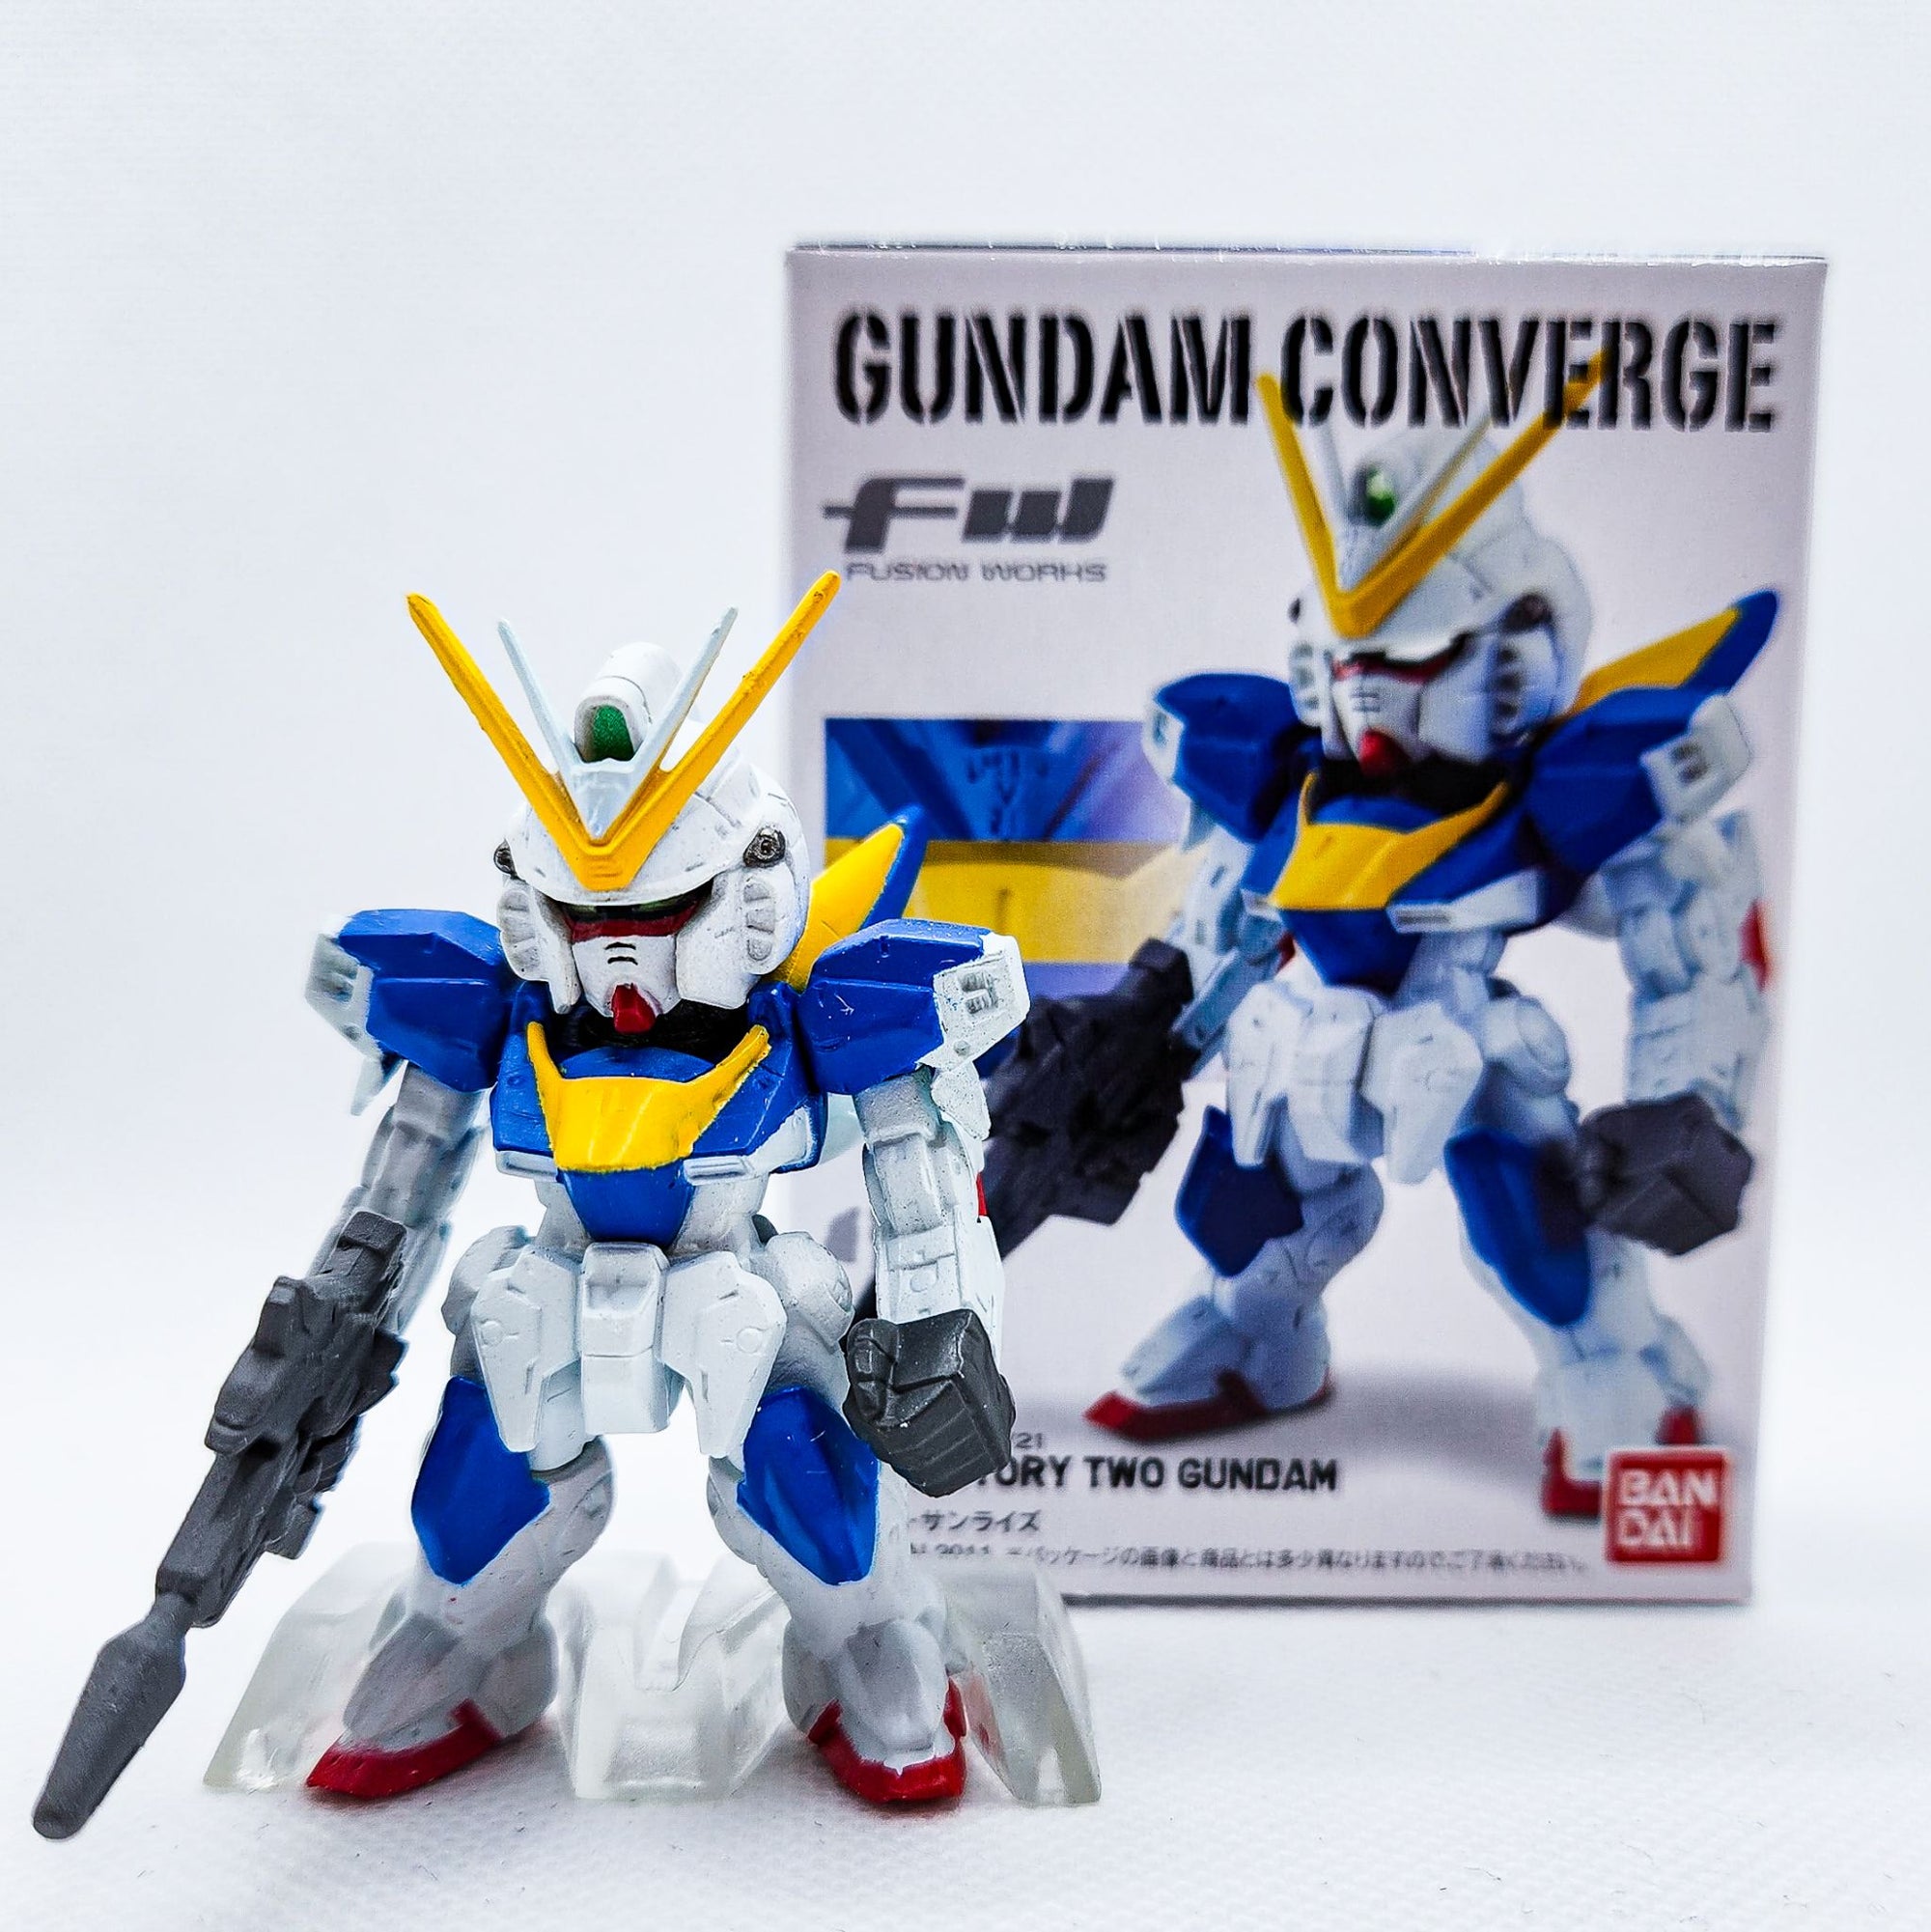 Gundam Converge #23 Victory Two Gundam by Bandai - 4